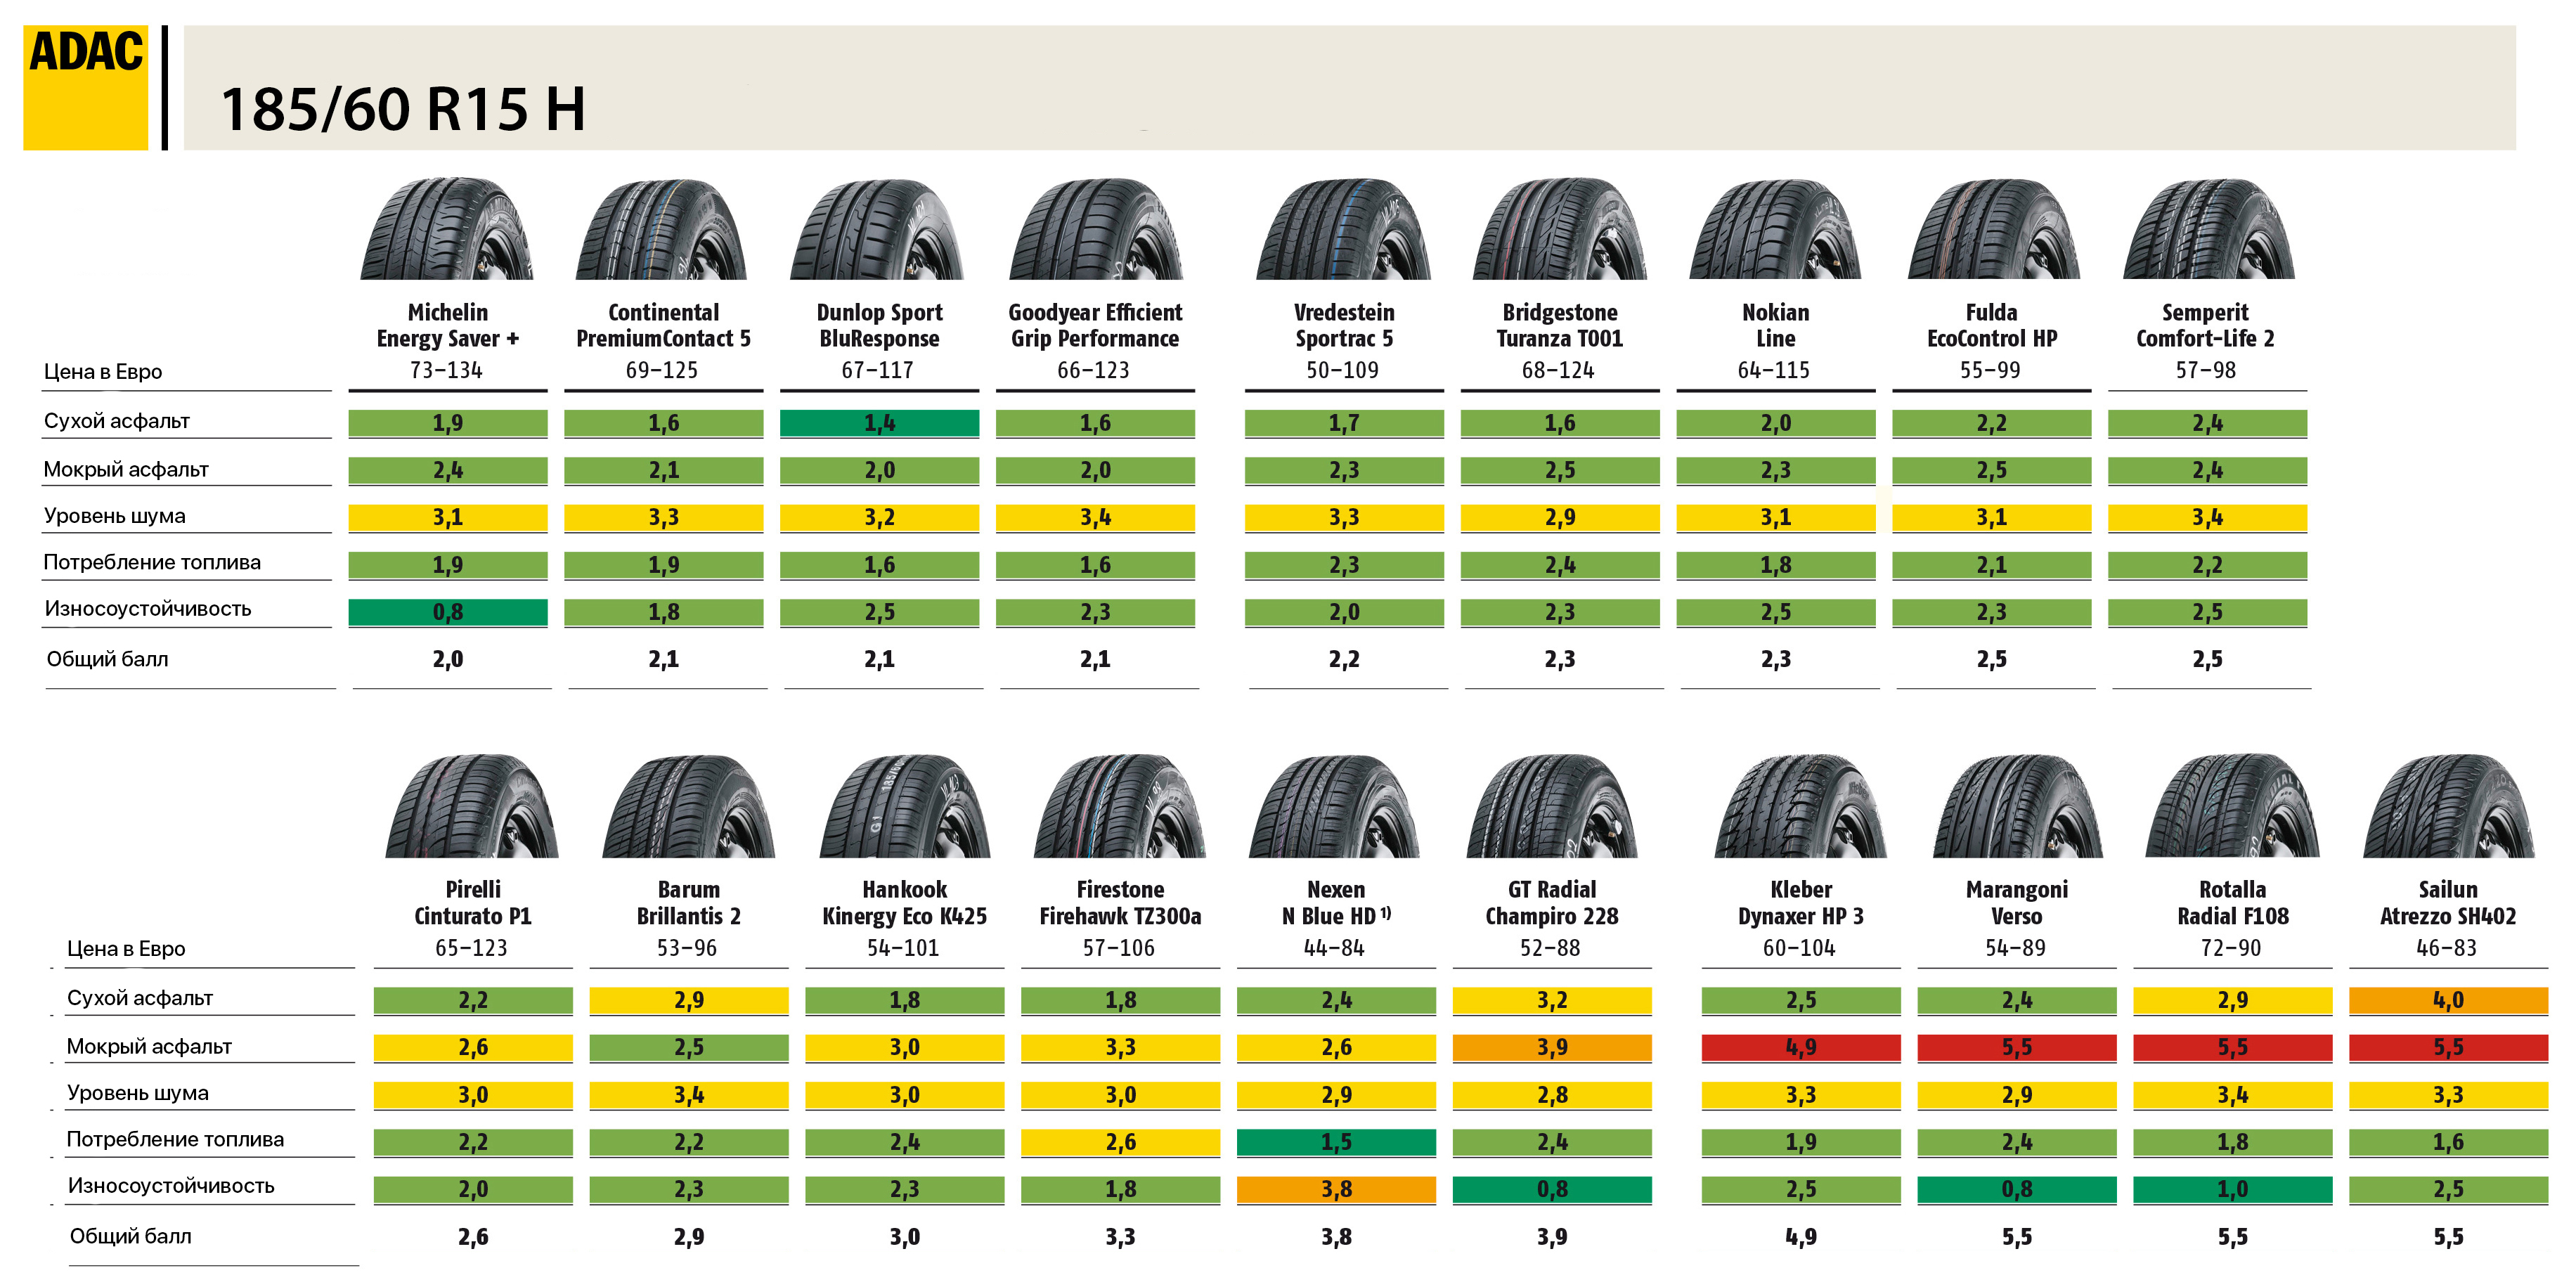 Итоги теста летних шин в двух размерах 2013